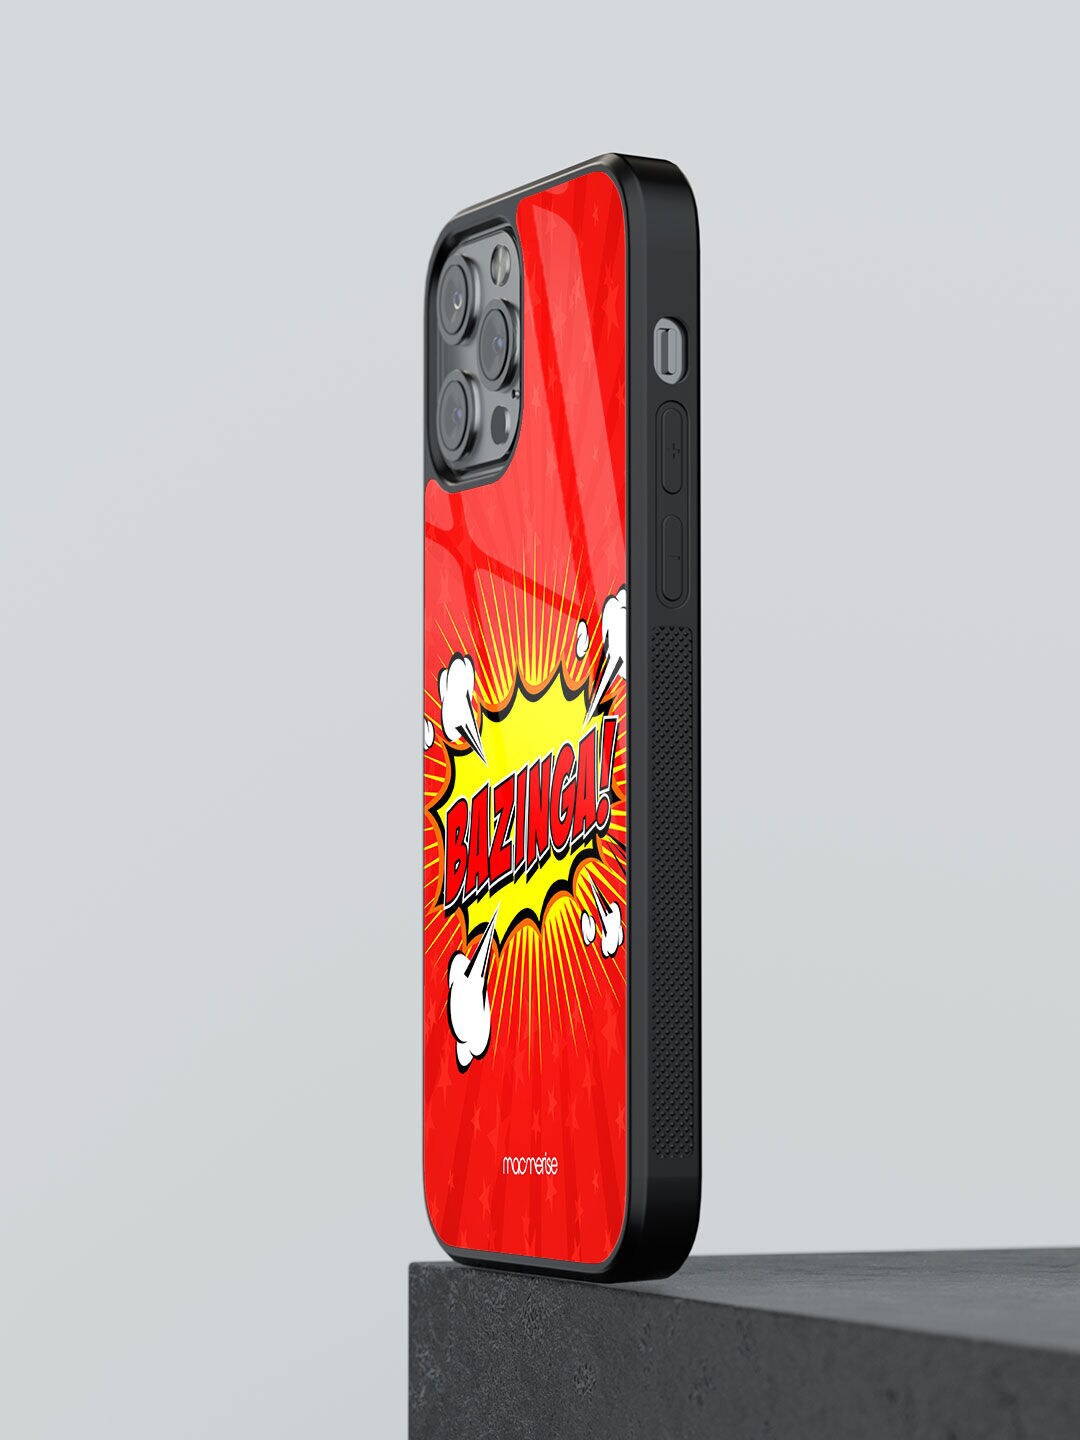 macmerise Red & Yellow Bazinga iPhone 12 Pro Max Mobile Phone Case Price in India